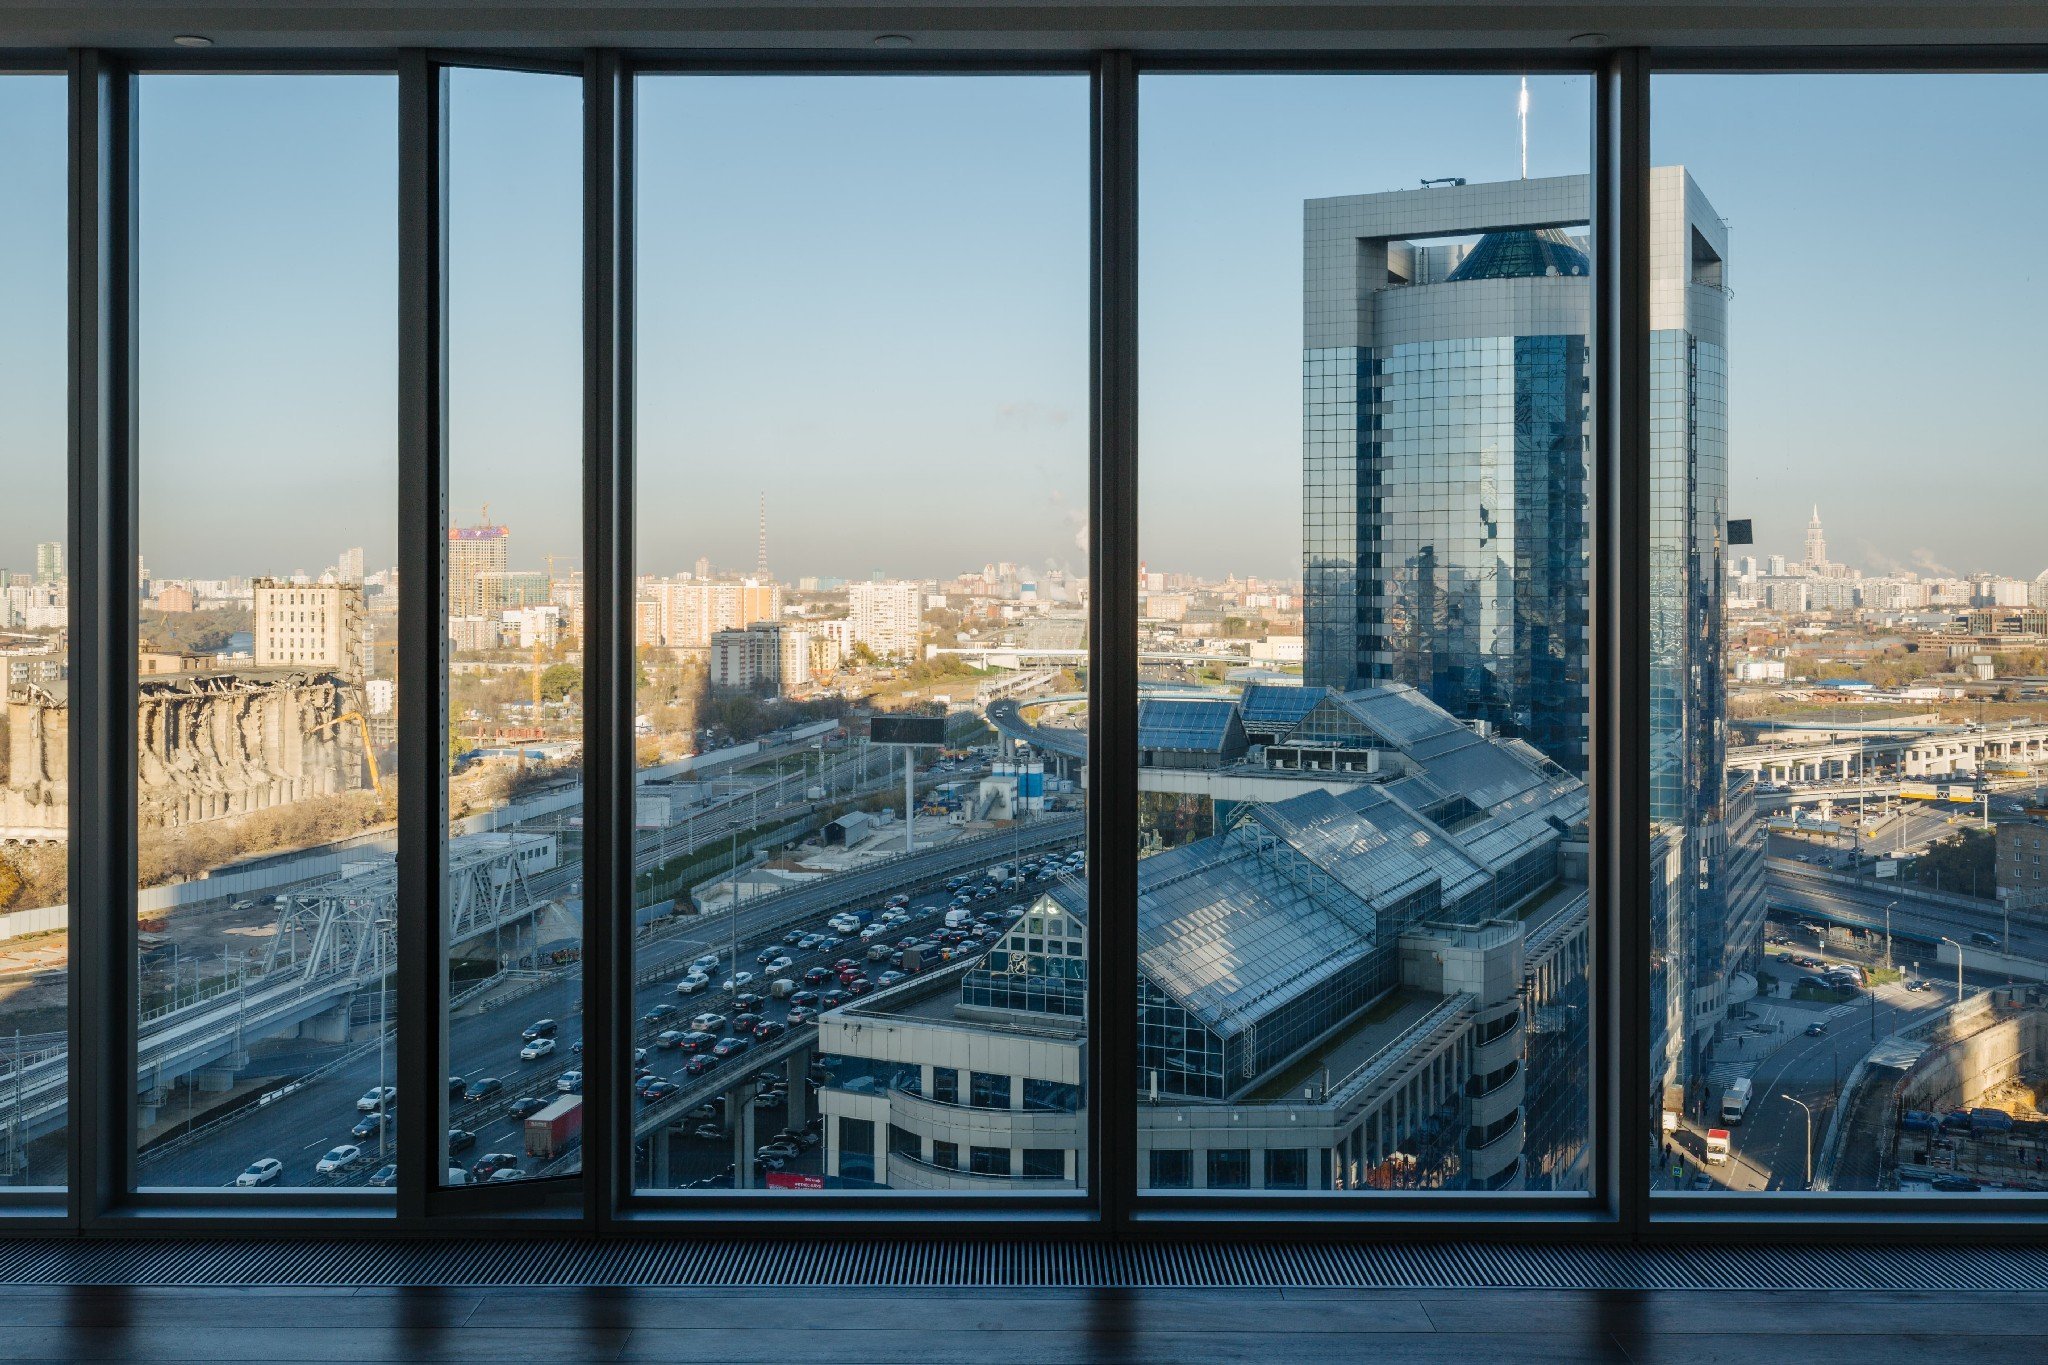 Iz okna. Панорамное окно в Москоу Сити. Апартаменты Москоу Сити вид с окна. Панорамный вид из окна. Виды панорамных окон.